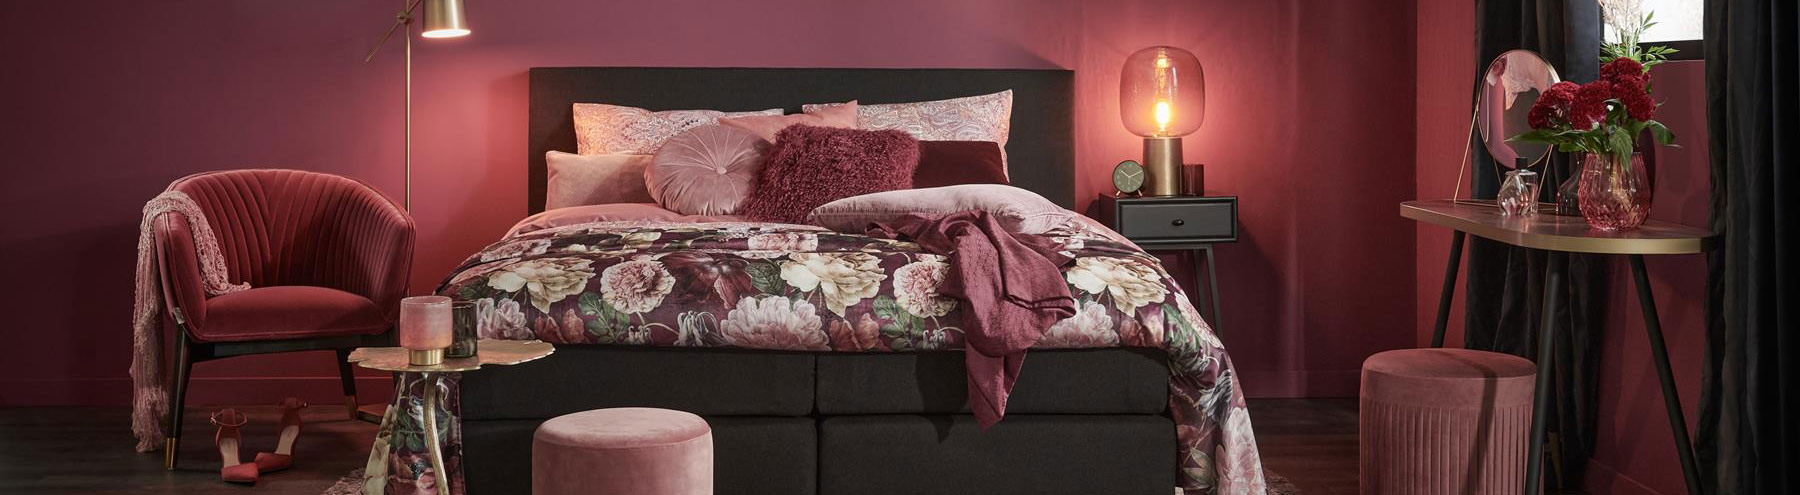 Romantische kleuren slaapkamer | Stek Magazine